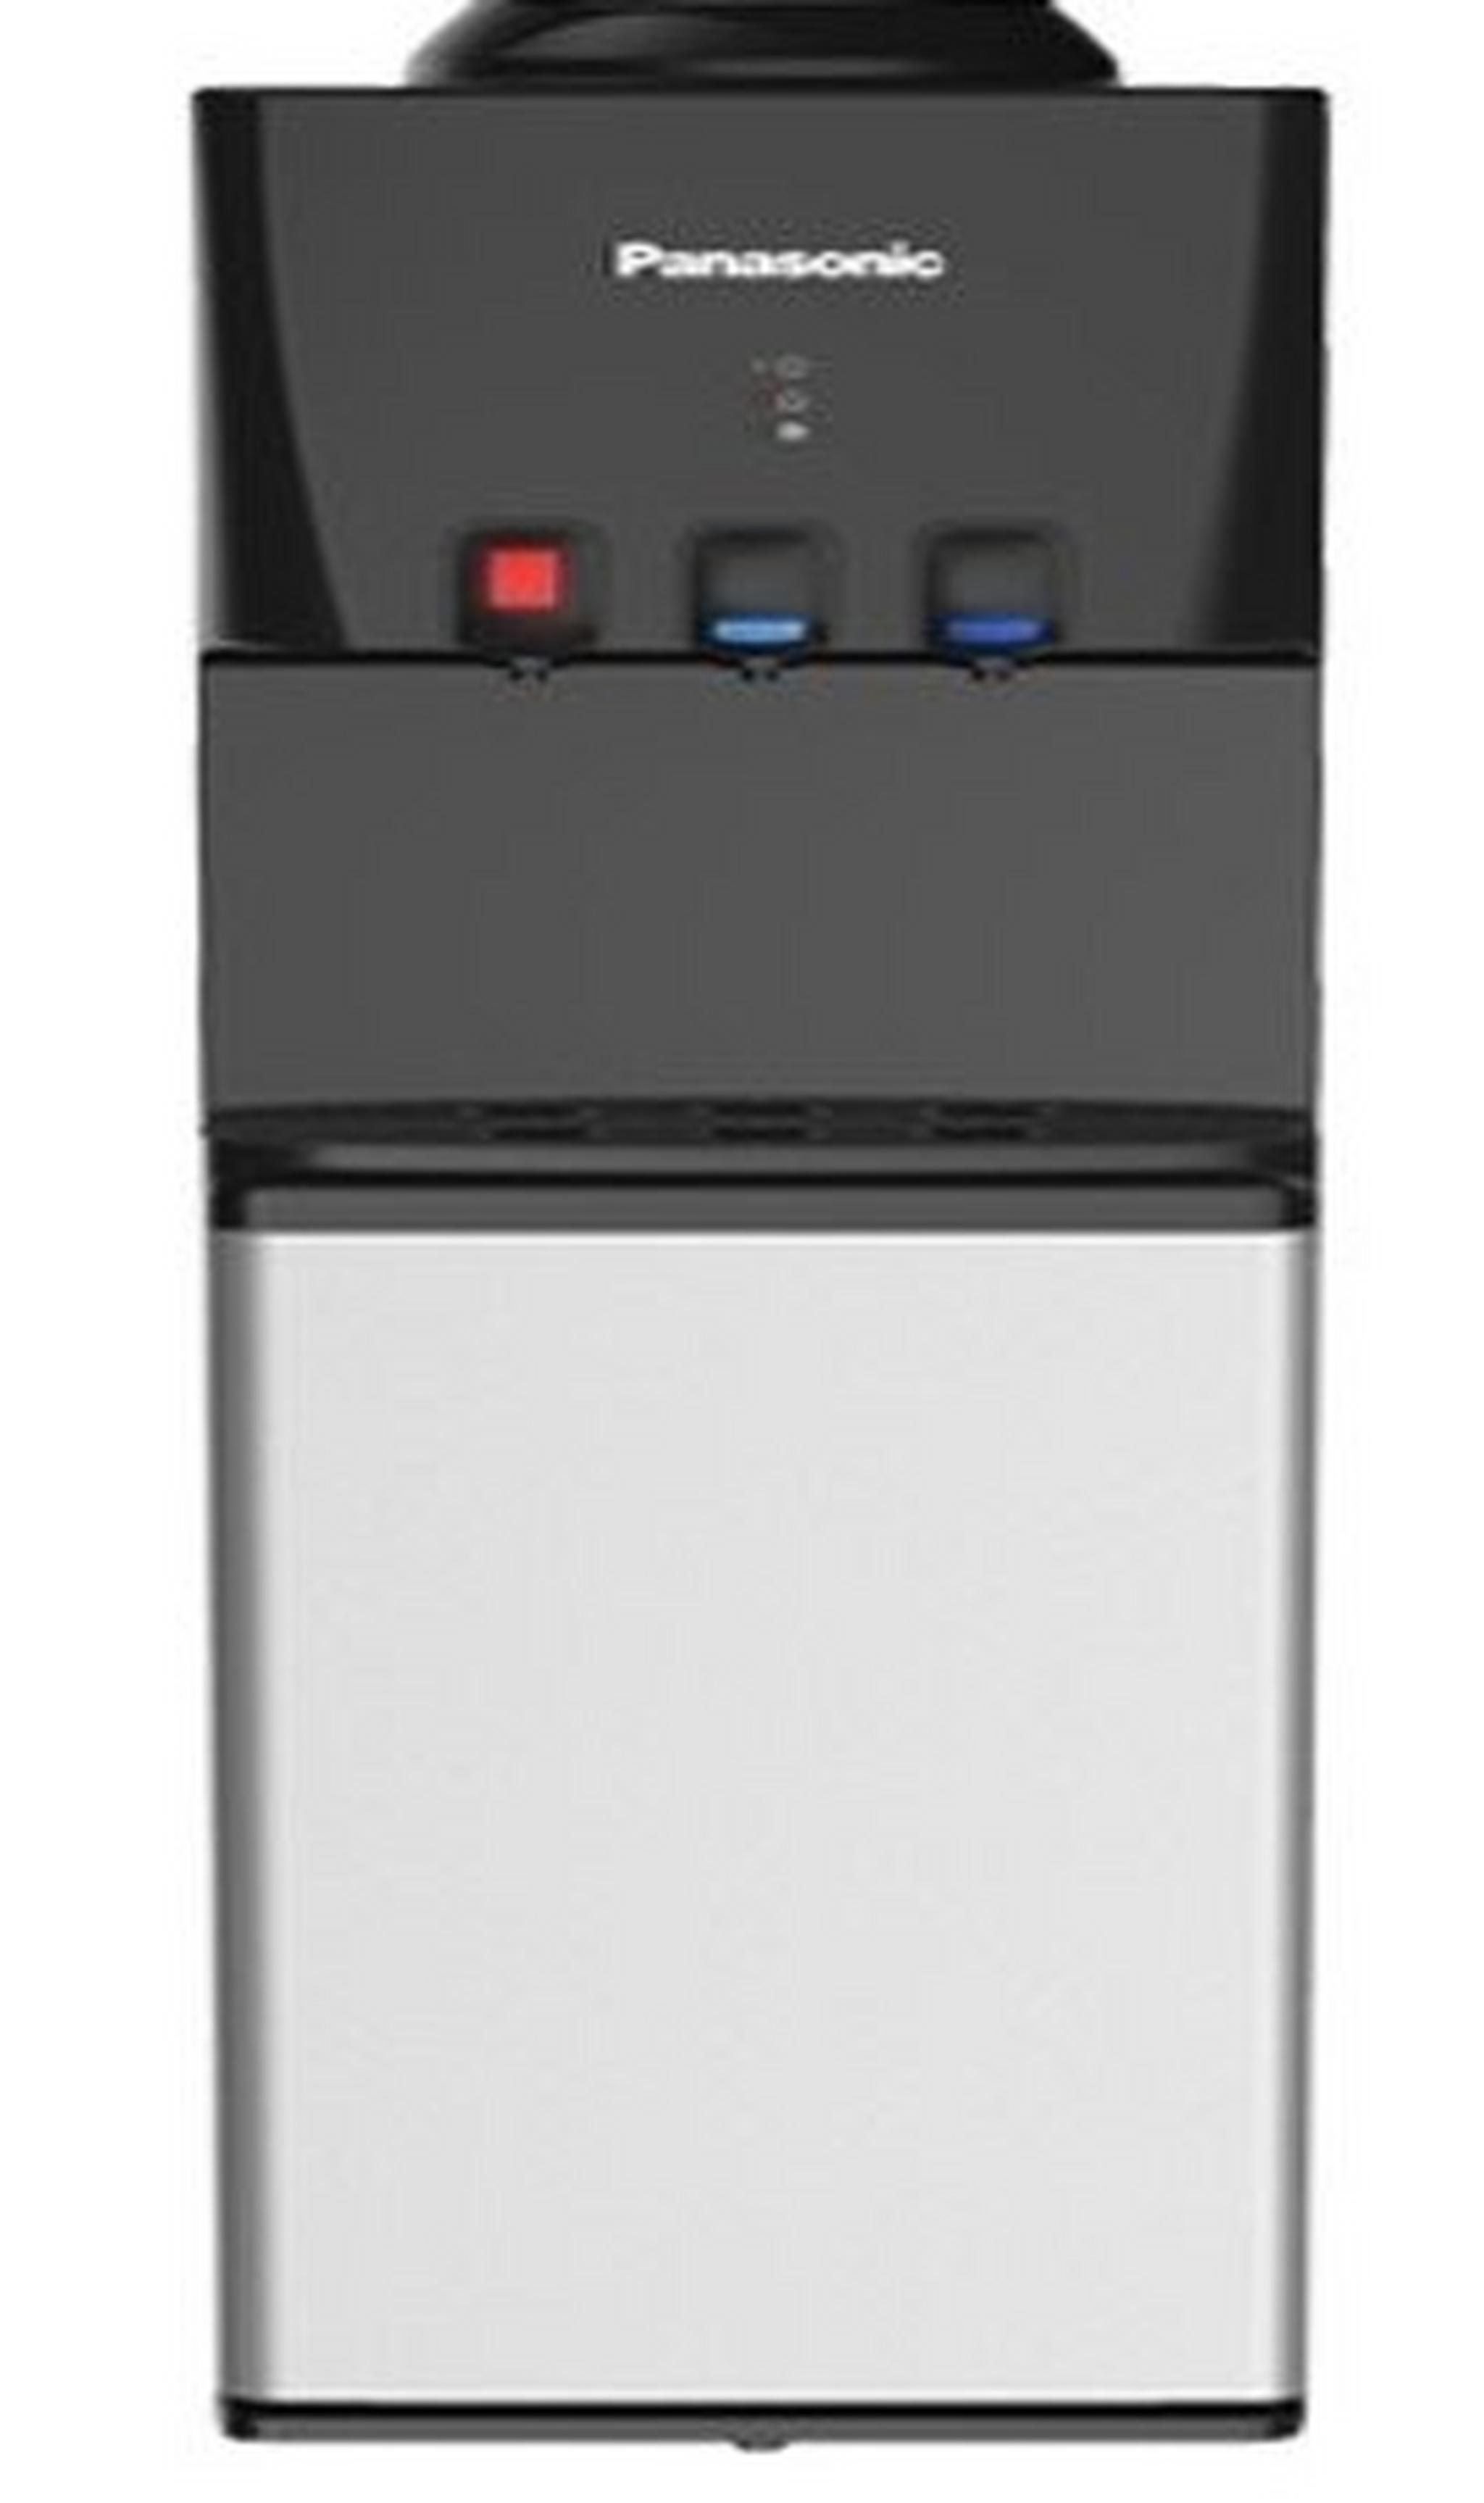 Panasonic Top Load Floor Standing Water Dispenser - White/Silver